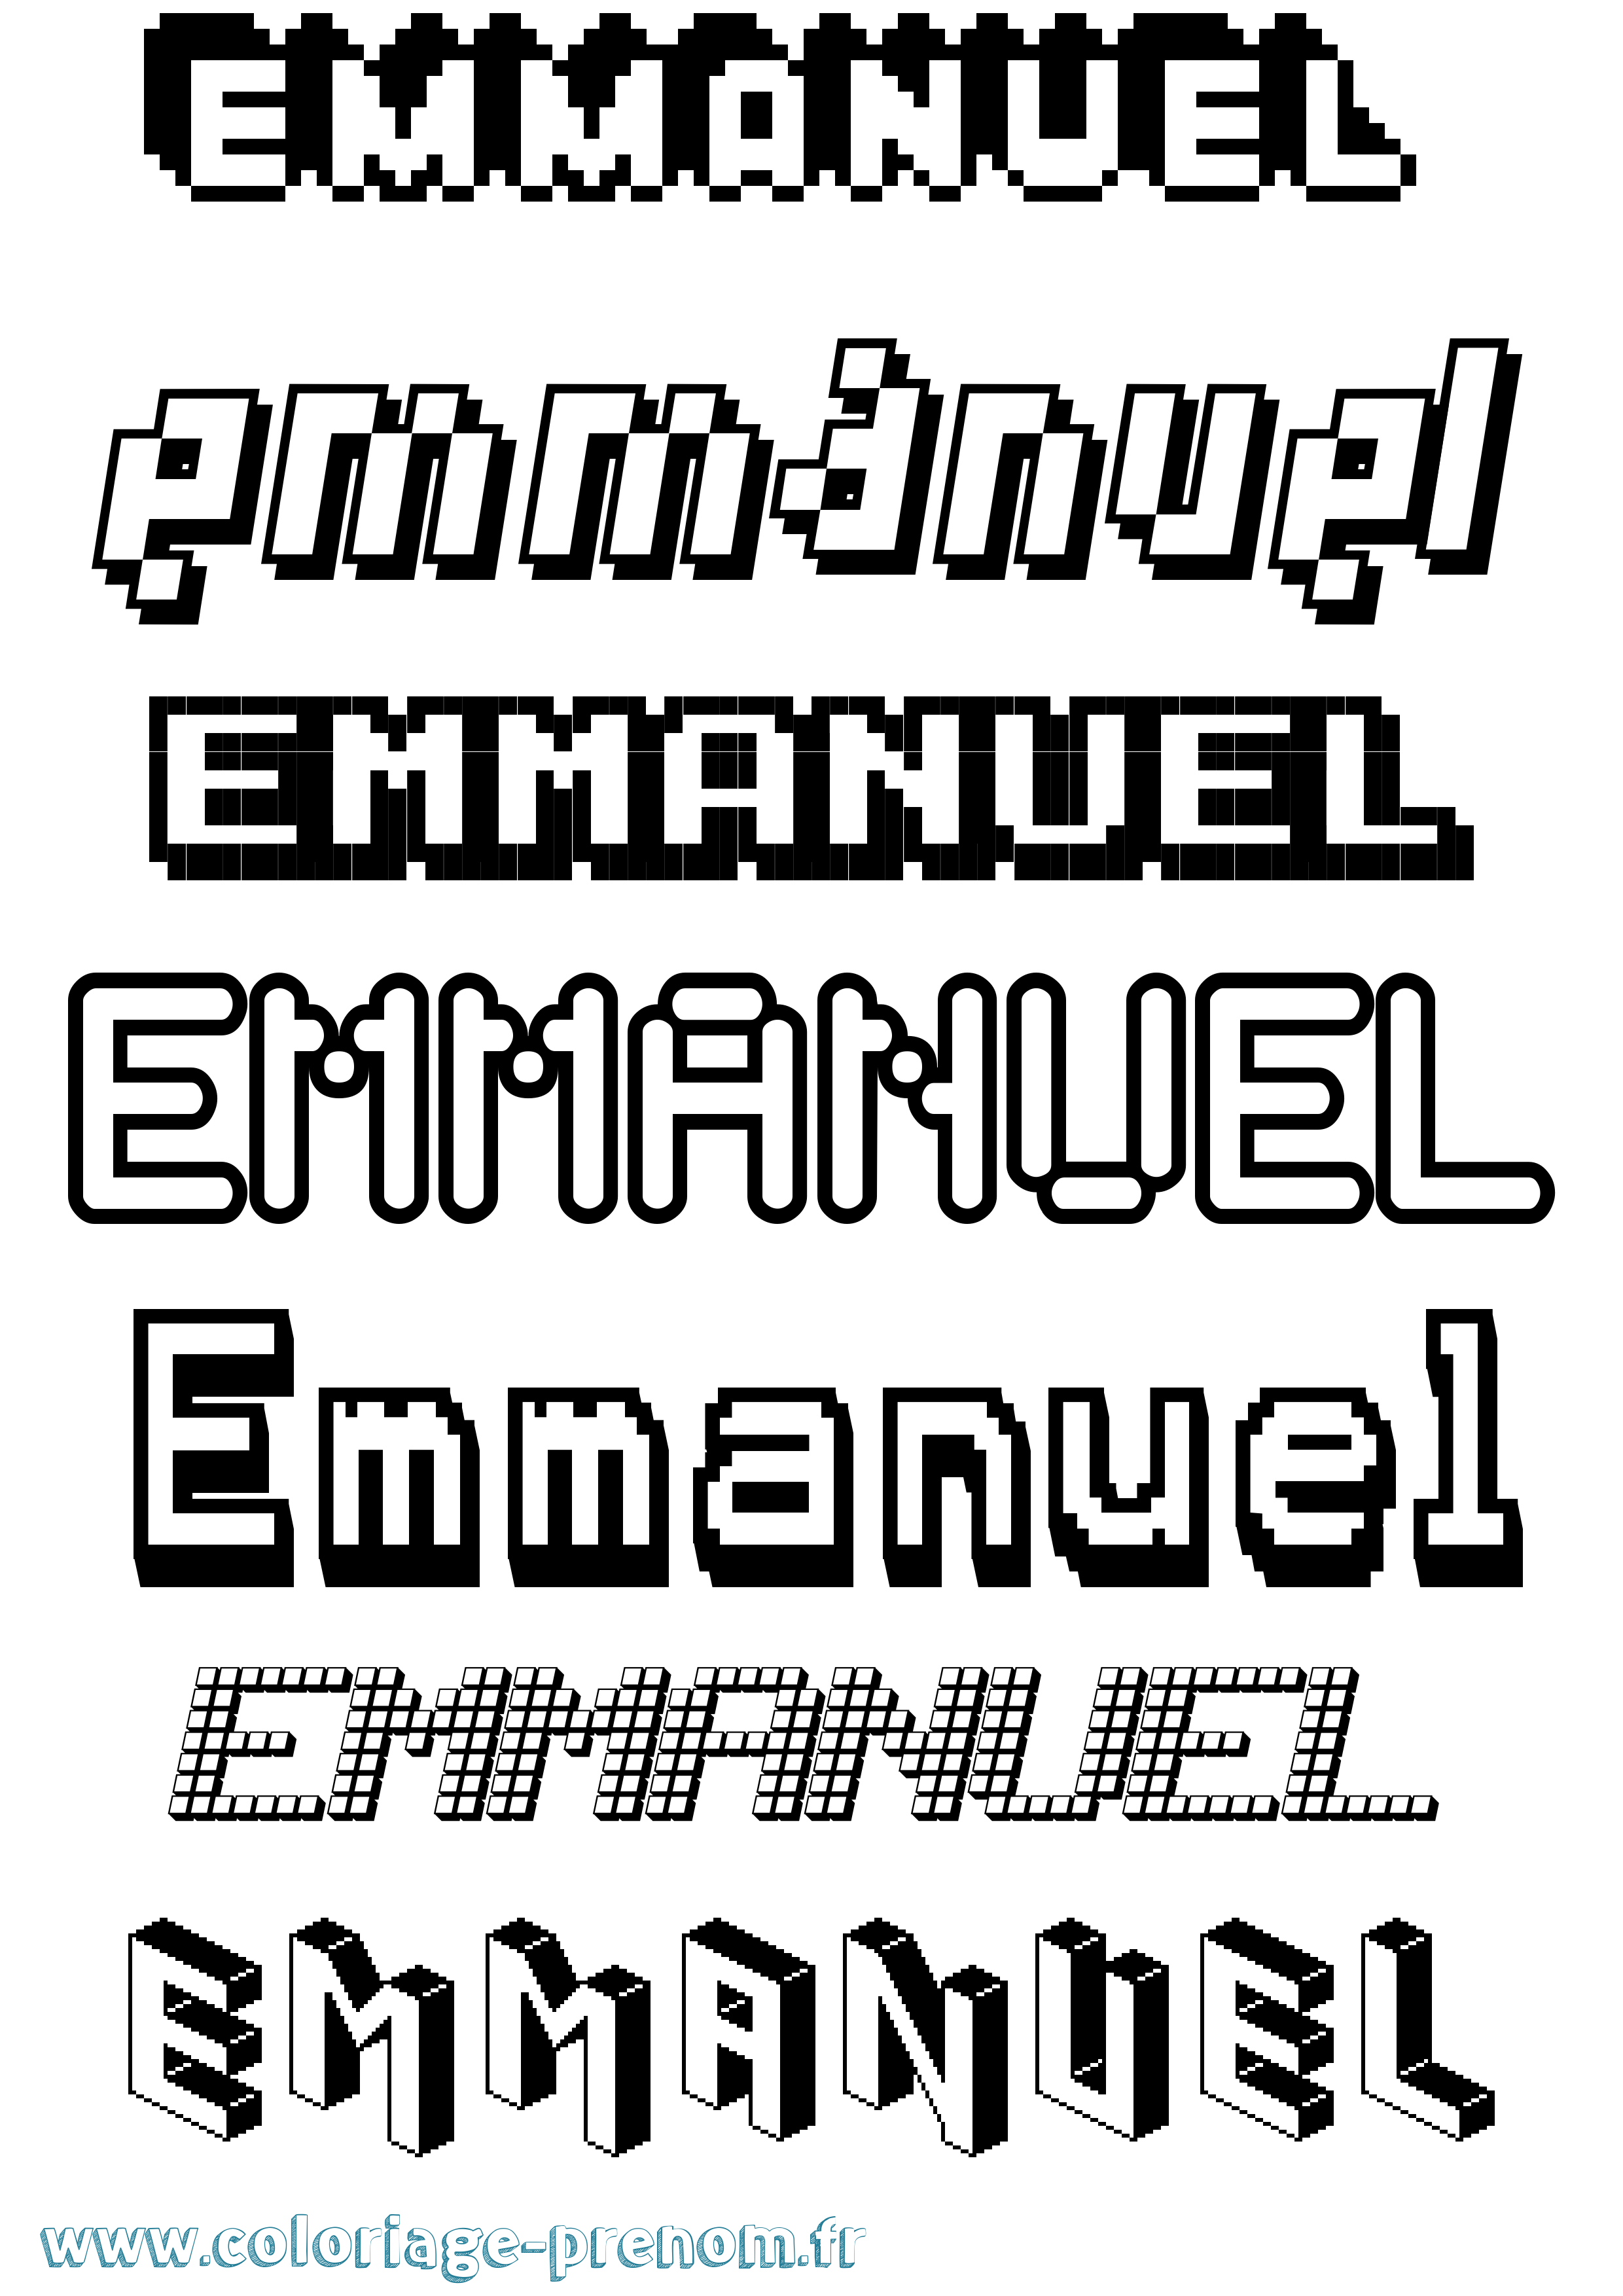 Coloriage prénom Emmanuel